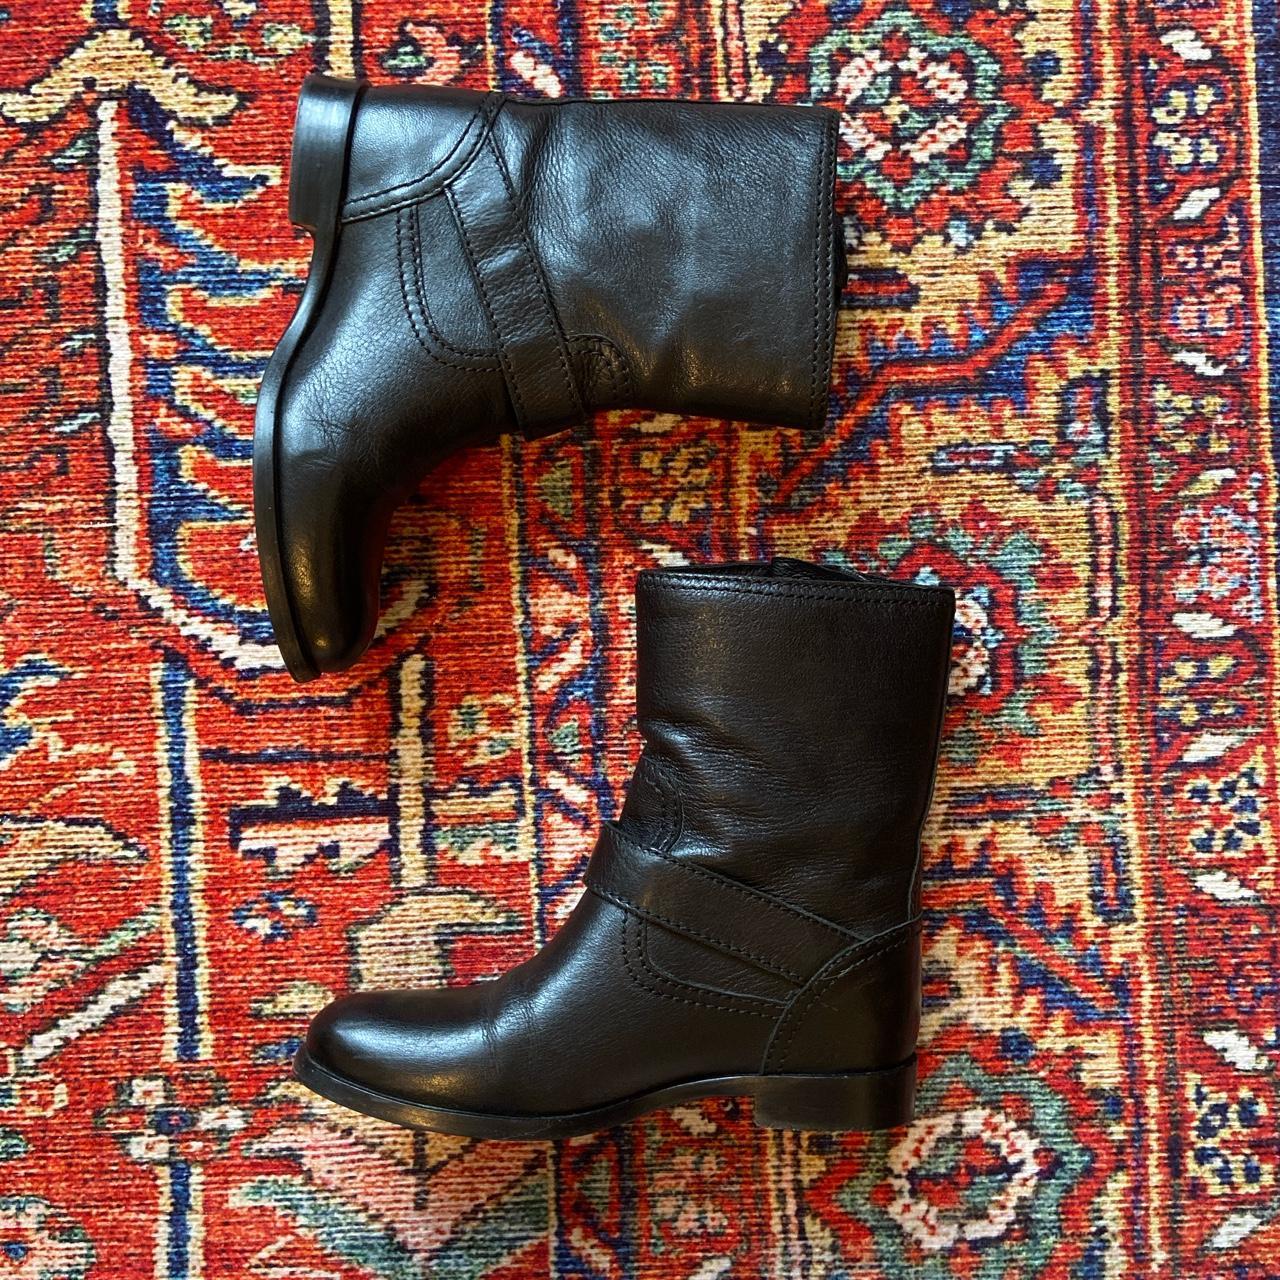 Prada Women's Black Boots | Depop